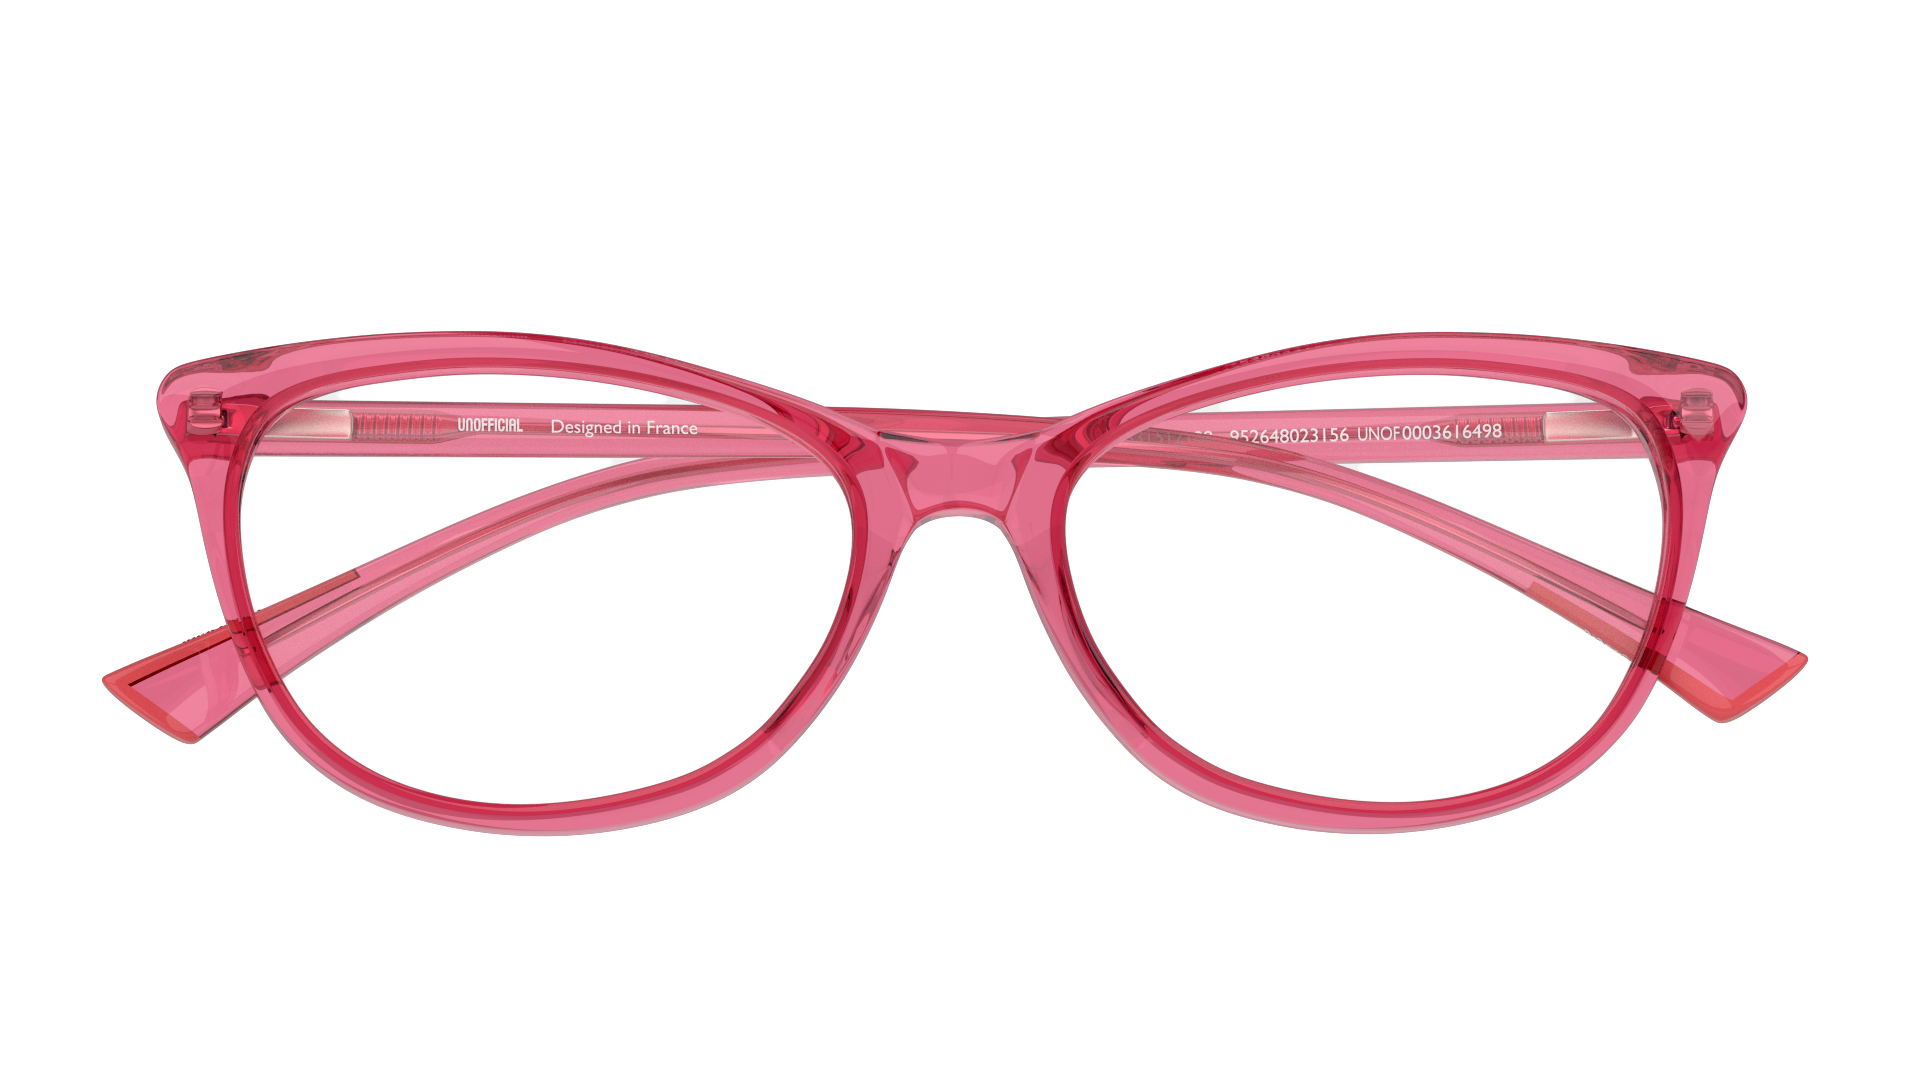 Folded Unofficial UNOF0003 Glasses Transparent / Transparent, Pink